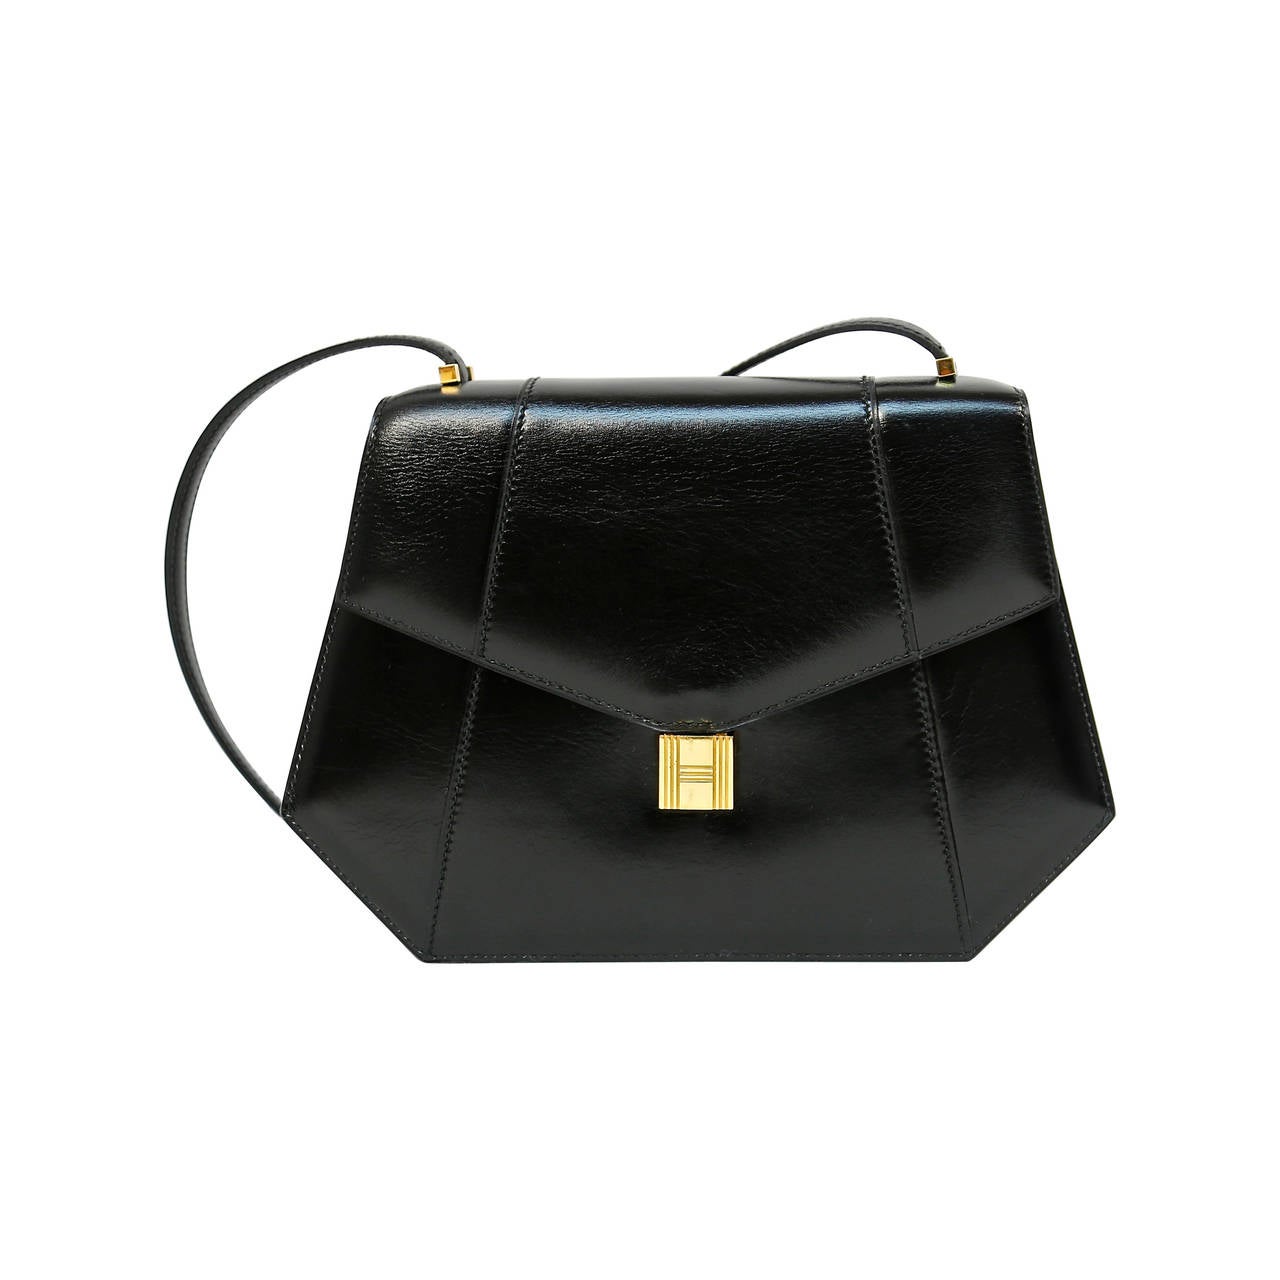 1970's HERMES black box leather shoulder bag with gold 'padlock' lock closure